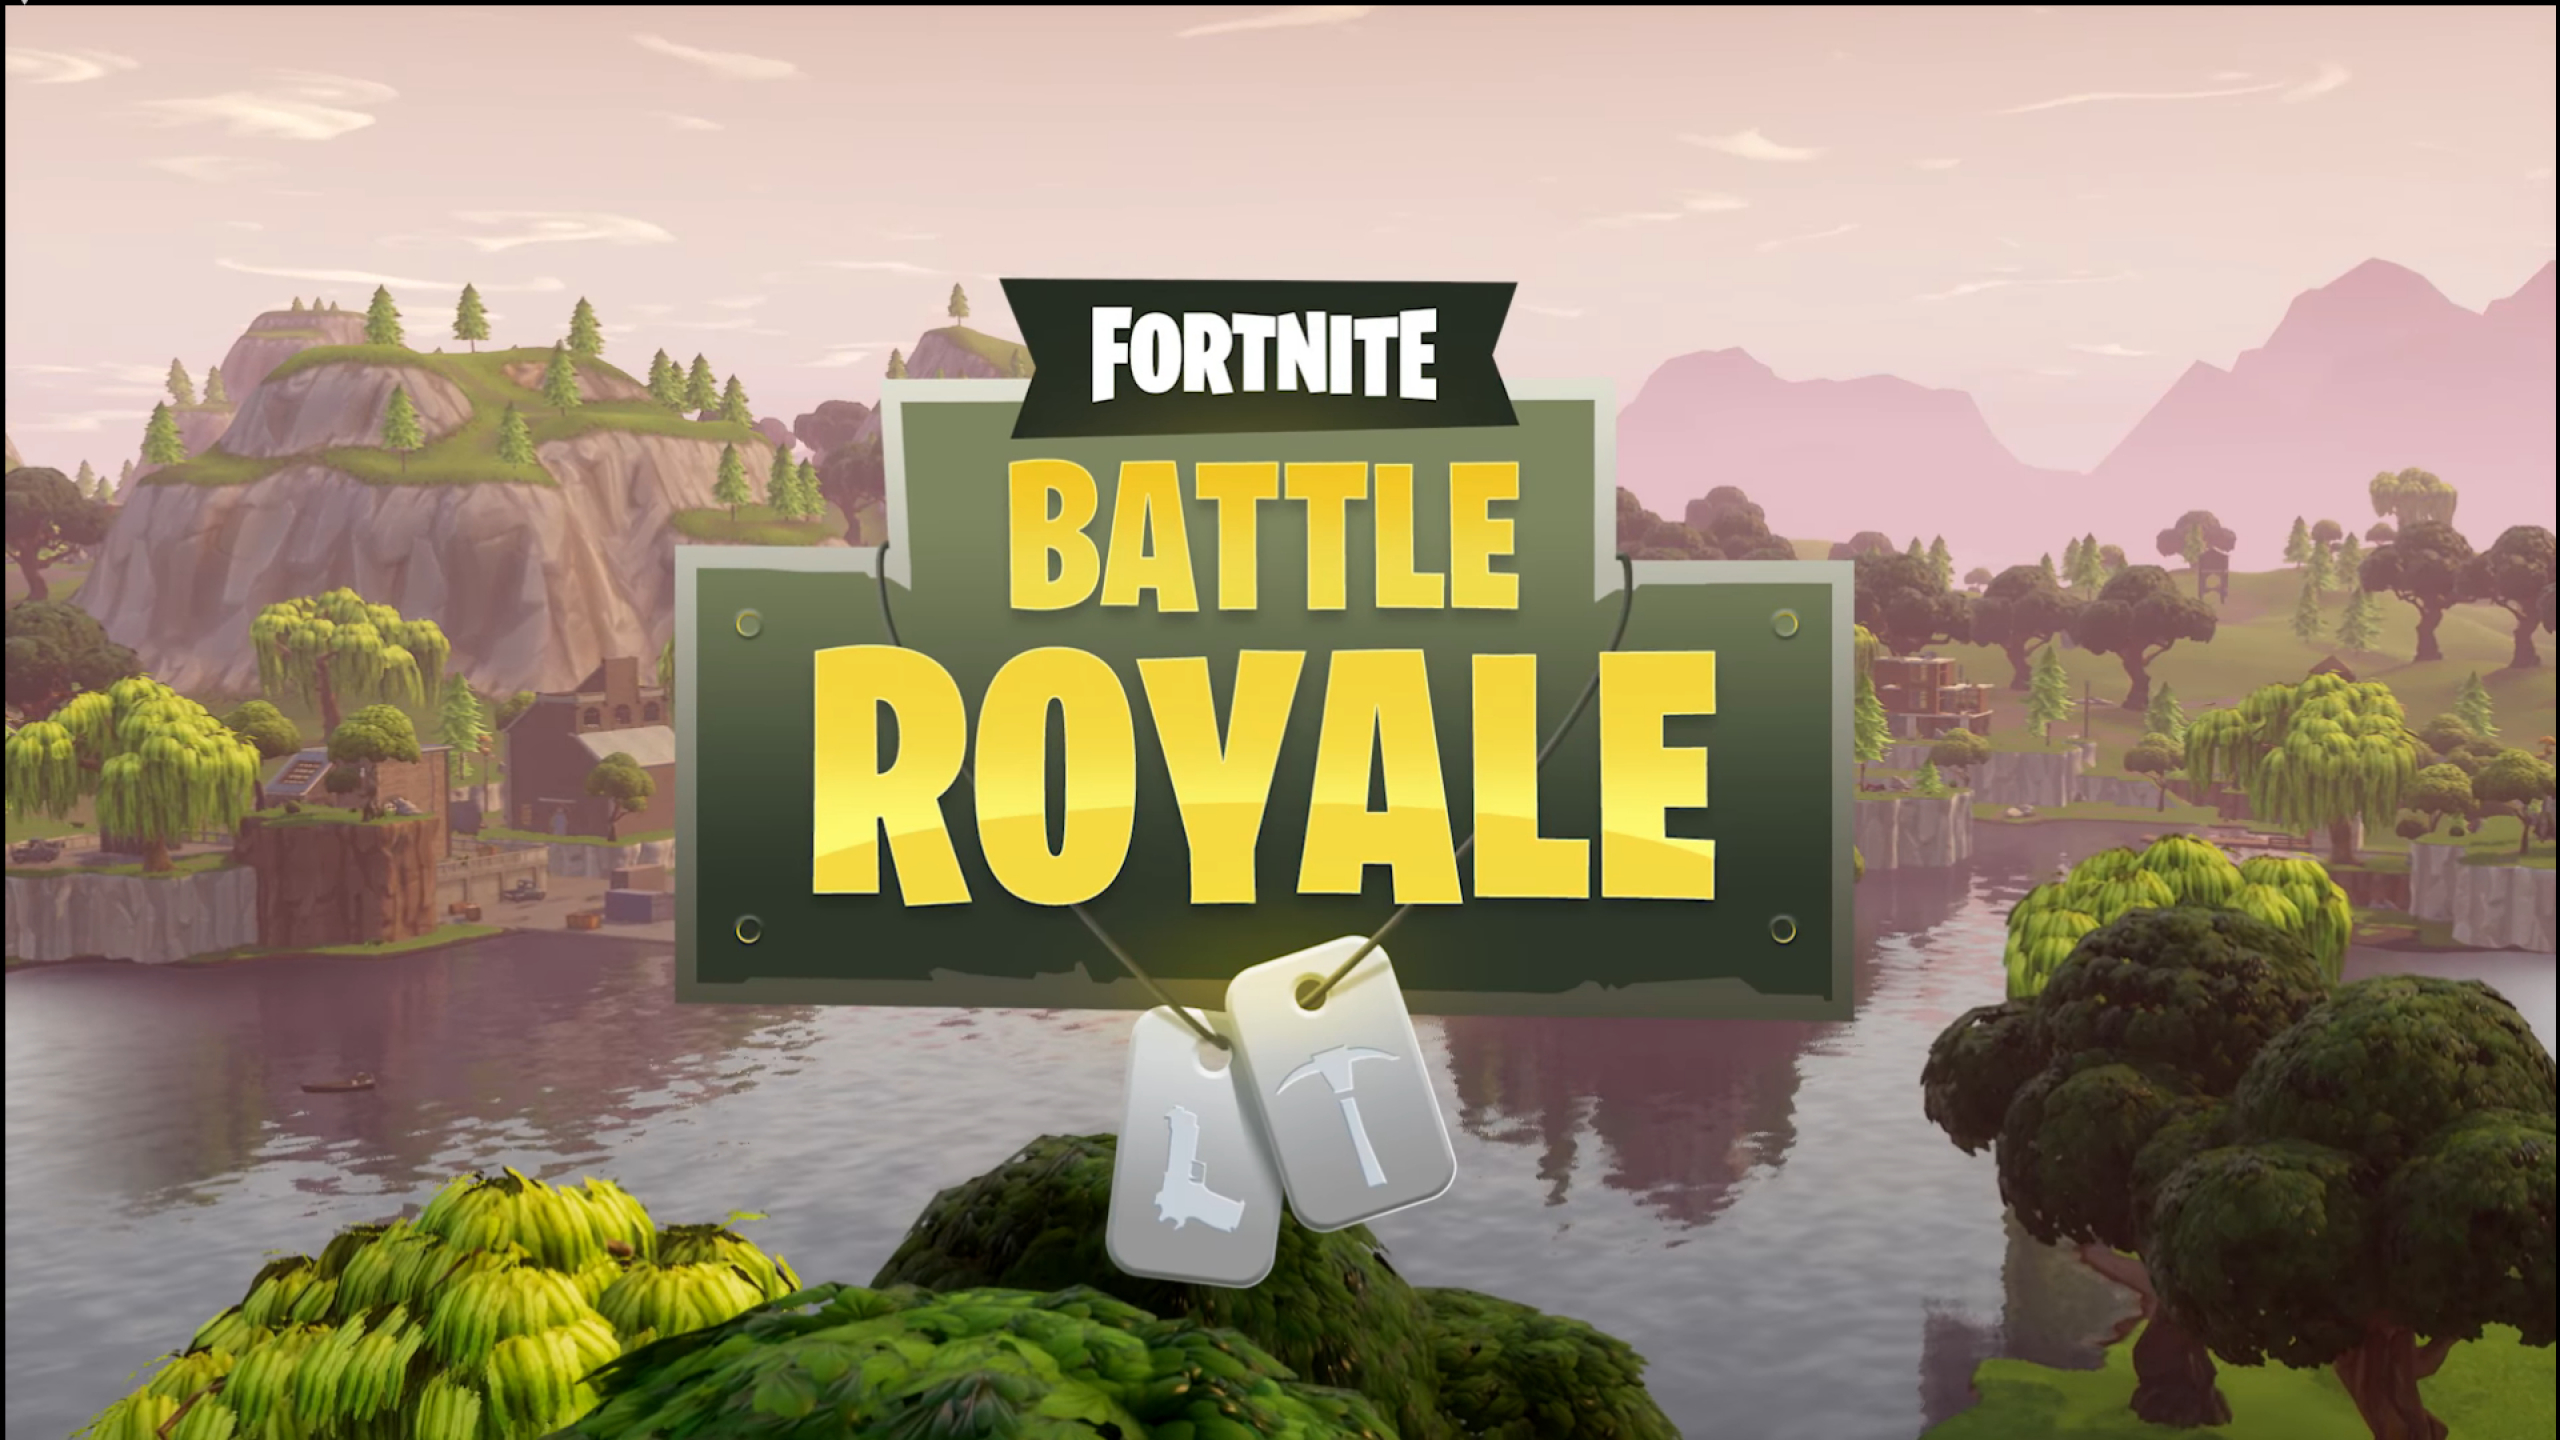 2560x1440 Fortnite Battle Royale Game Poster 1440p